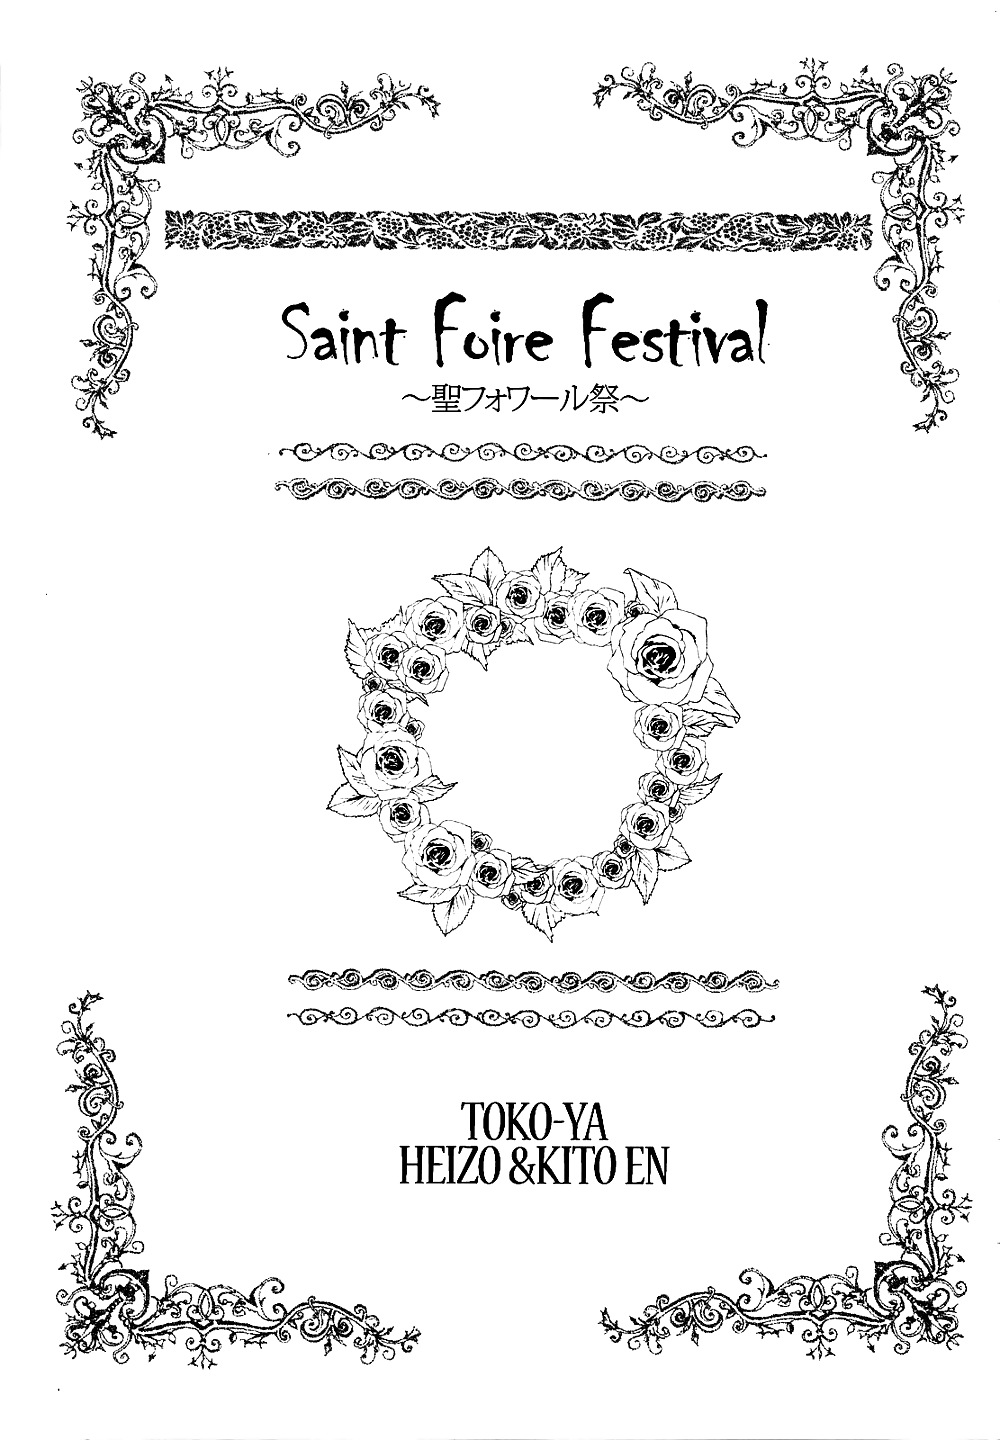 Toko-ya, festival de saint foire 01
 #17540805